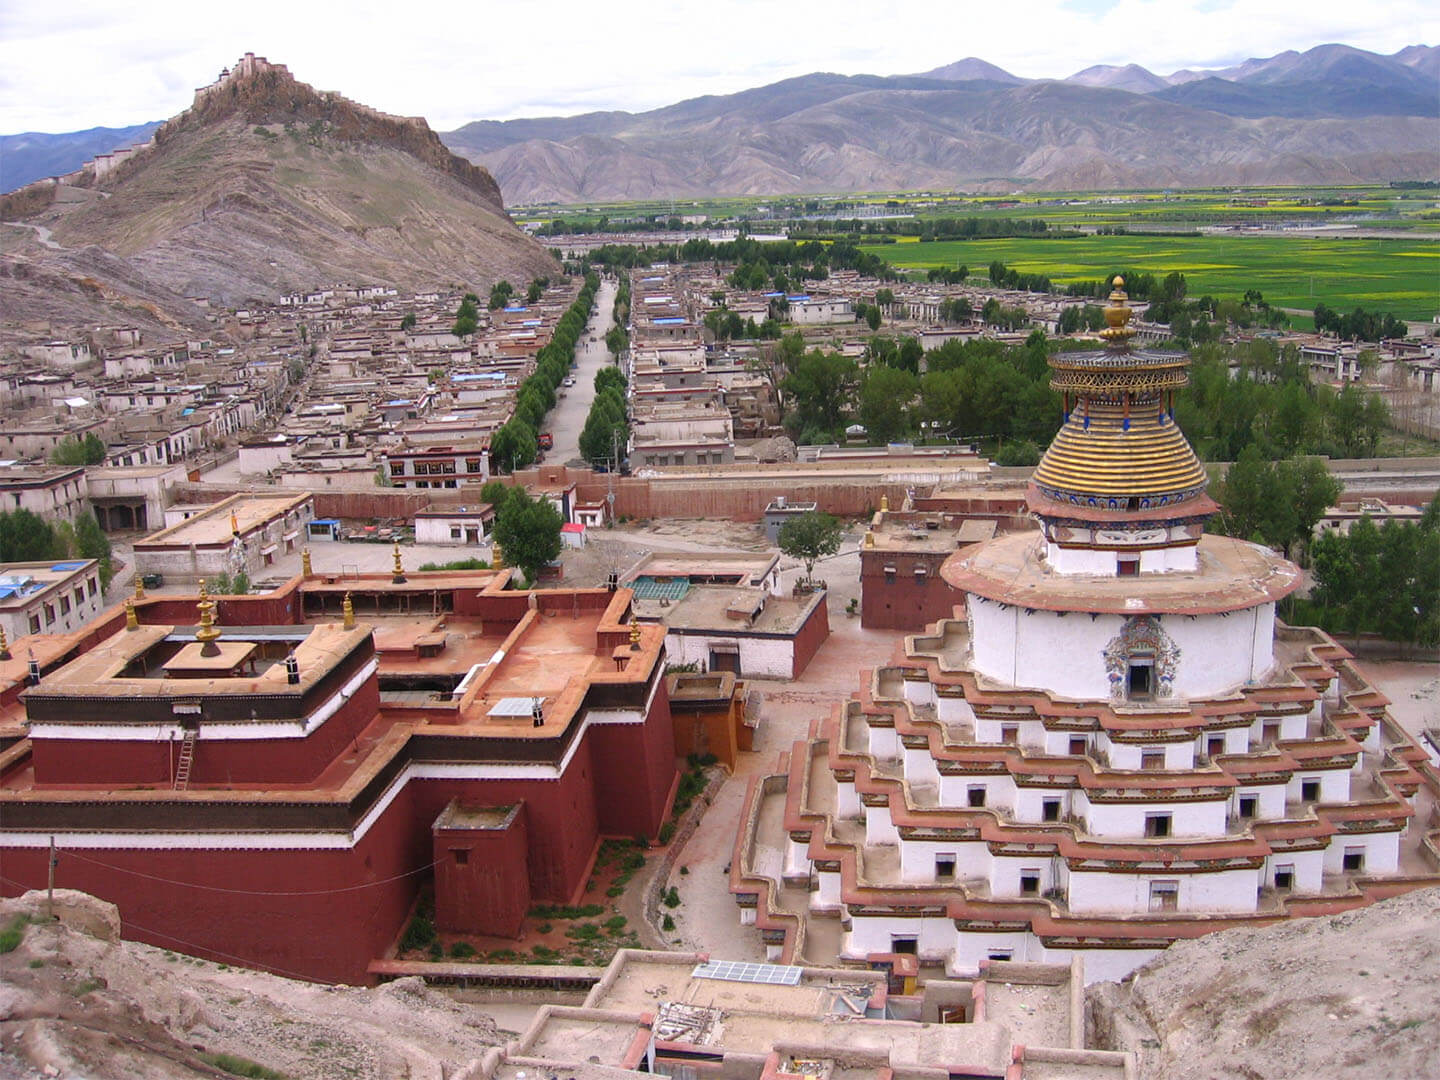 Kumbum stupa and Phelchoe monastery